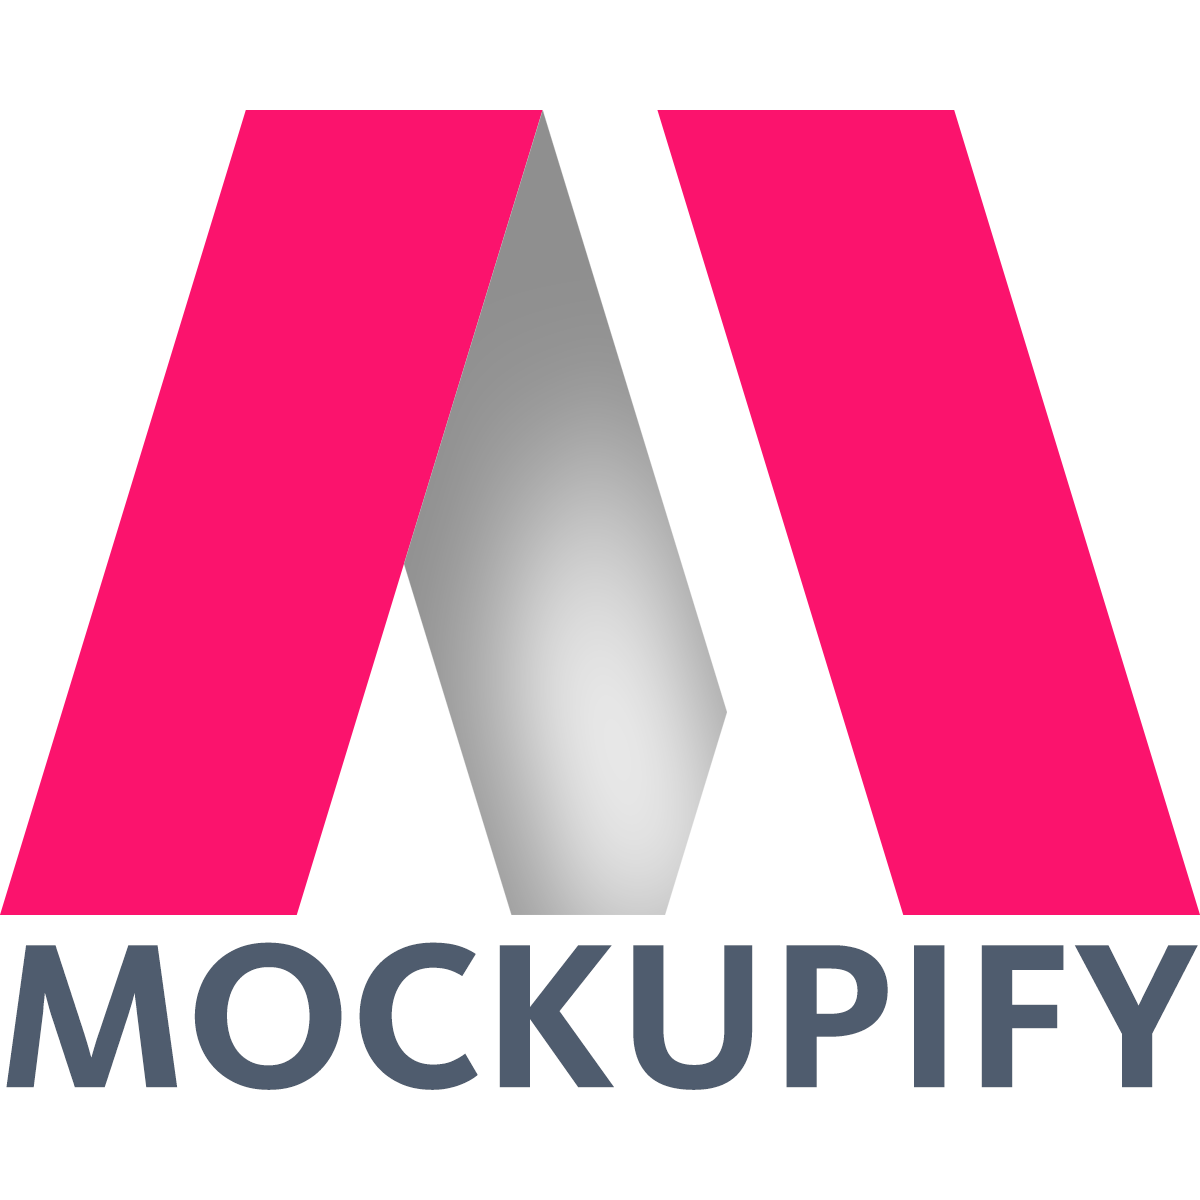 Mockupify | Print On Demand